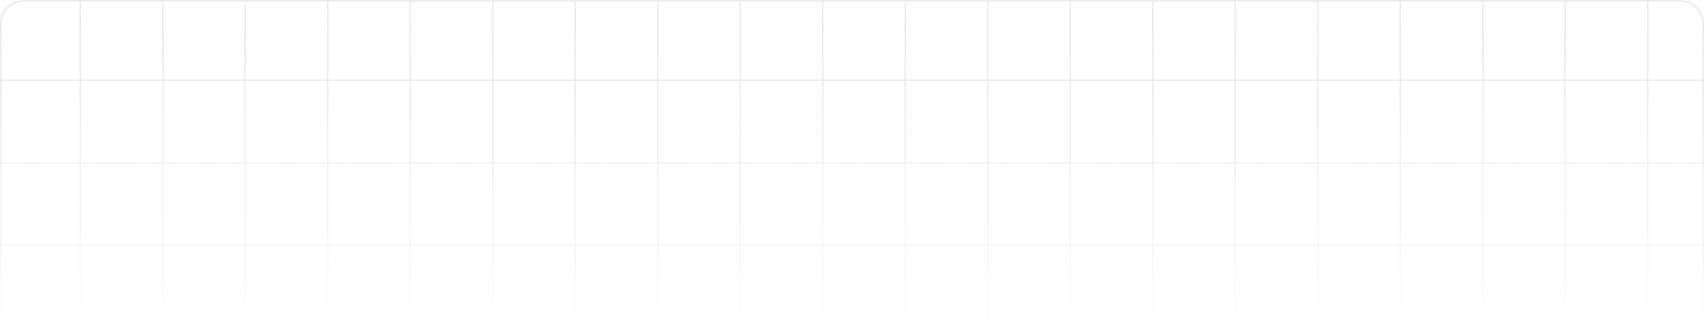 grid layout